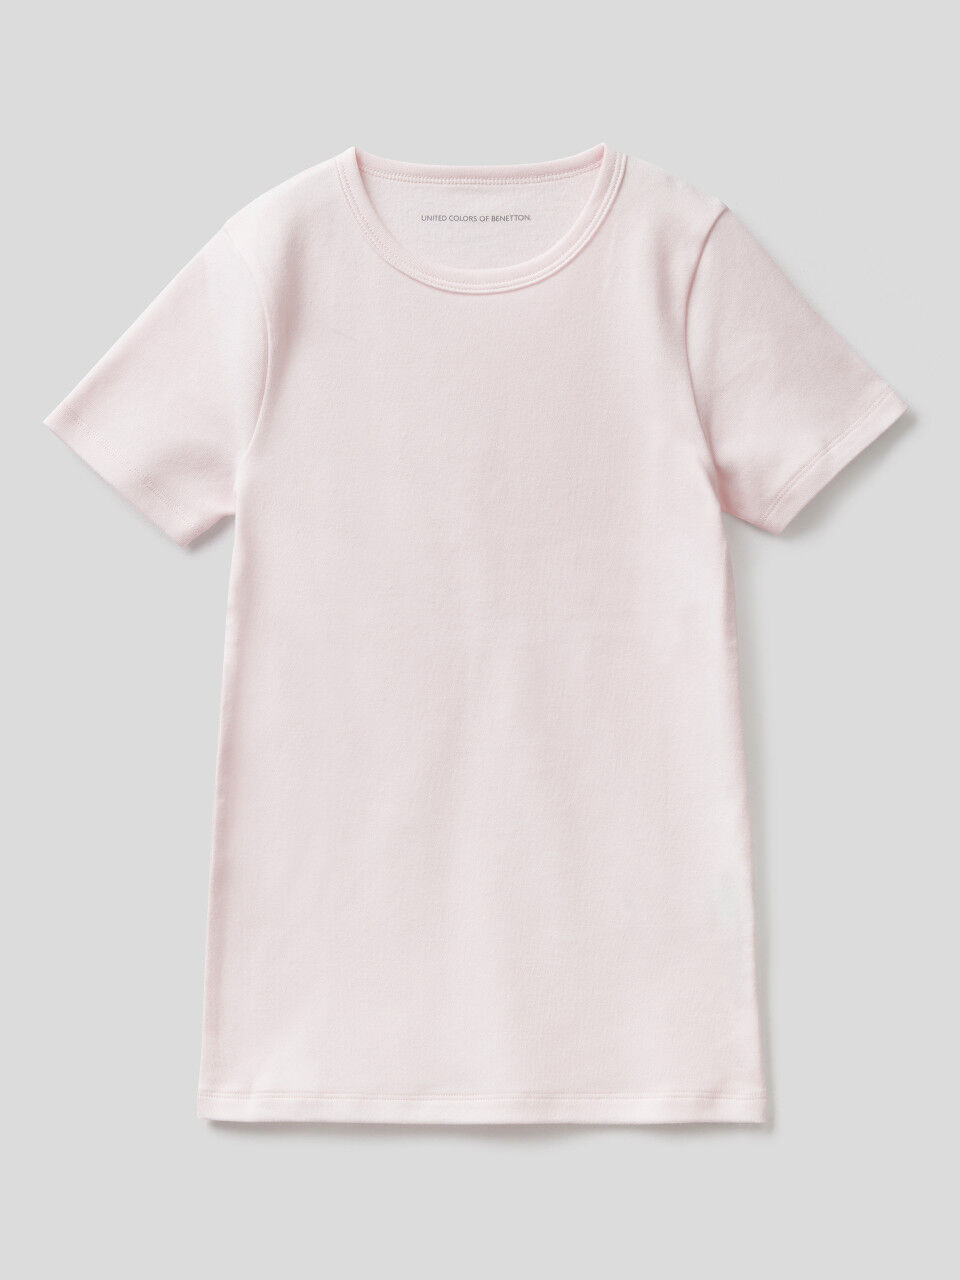 Short sleeve t-shirt in warm cotton